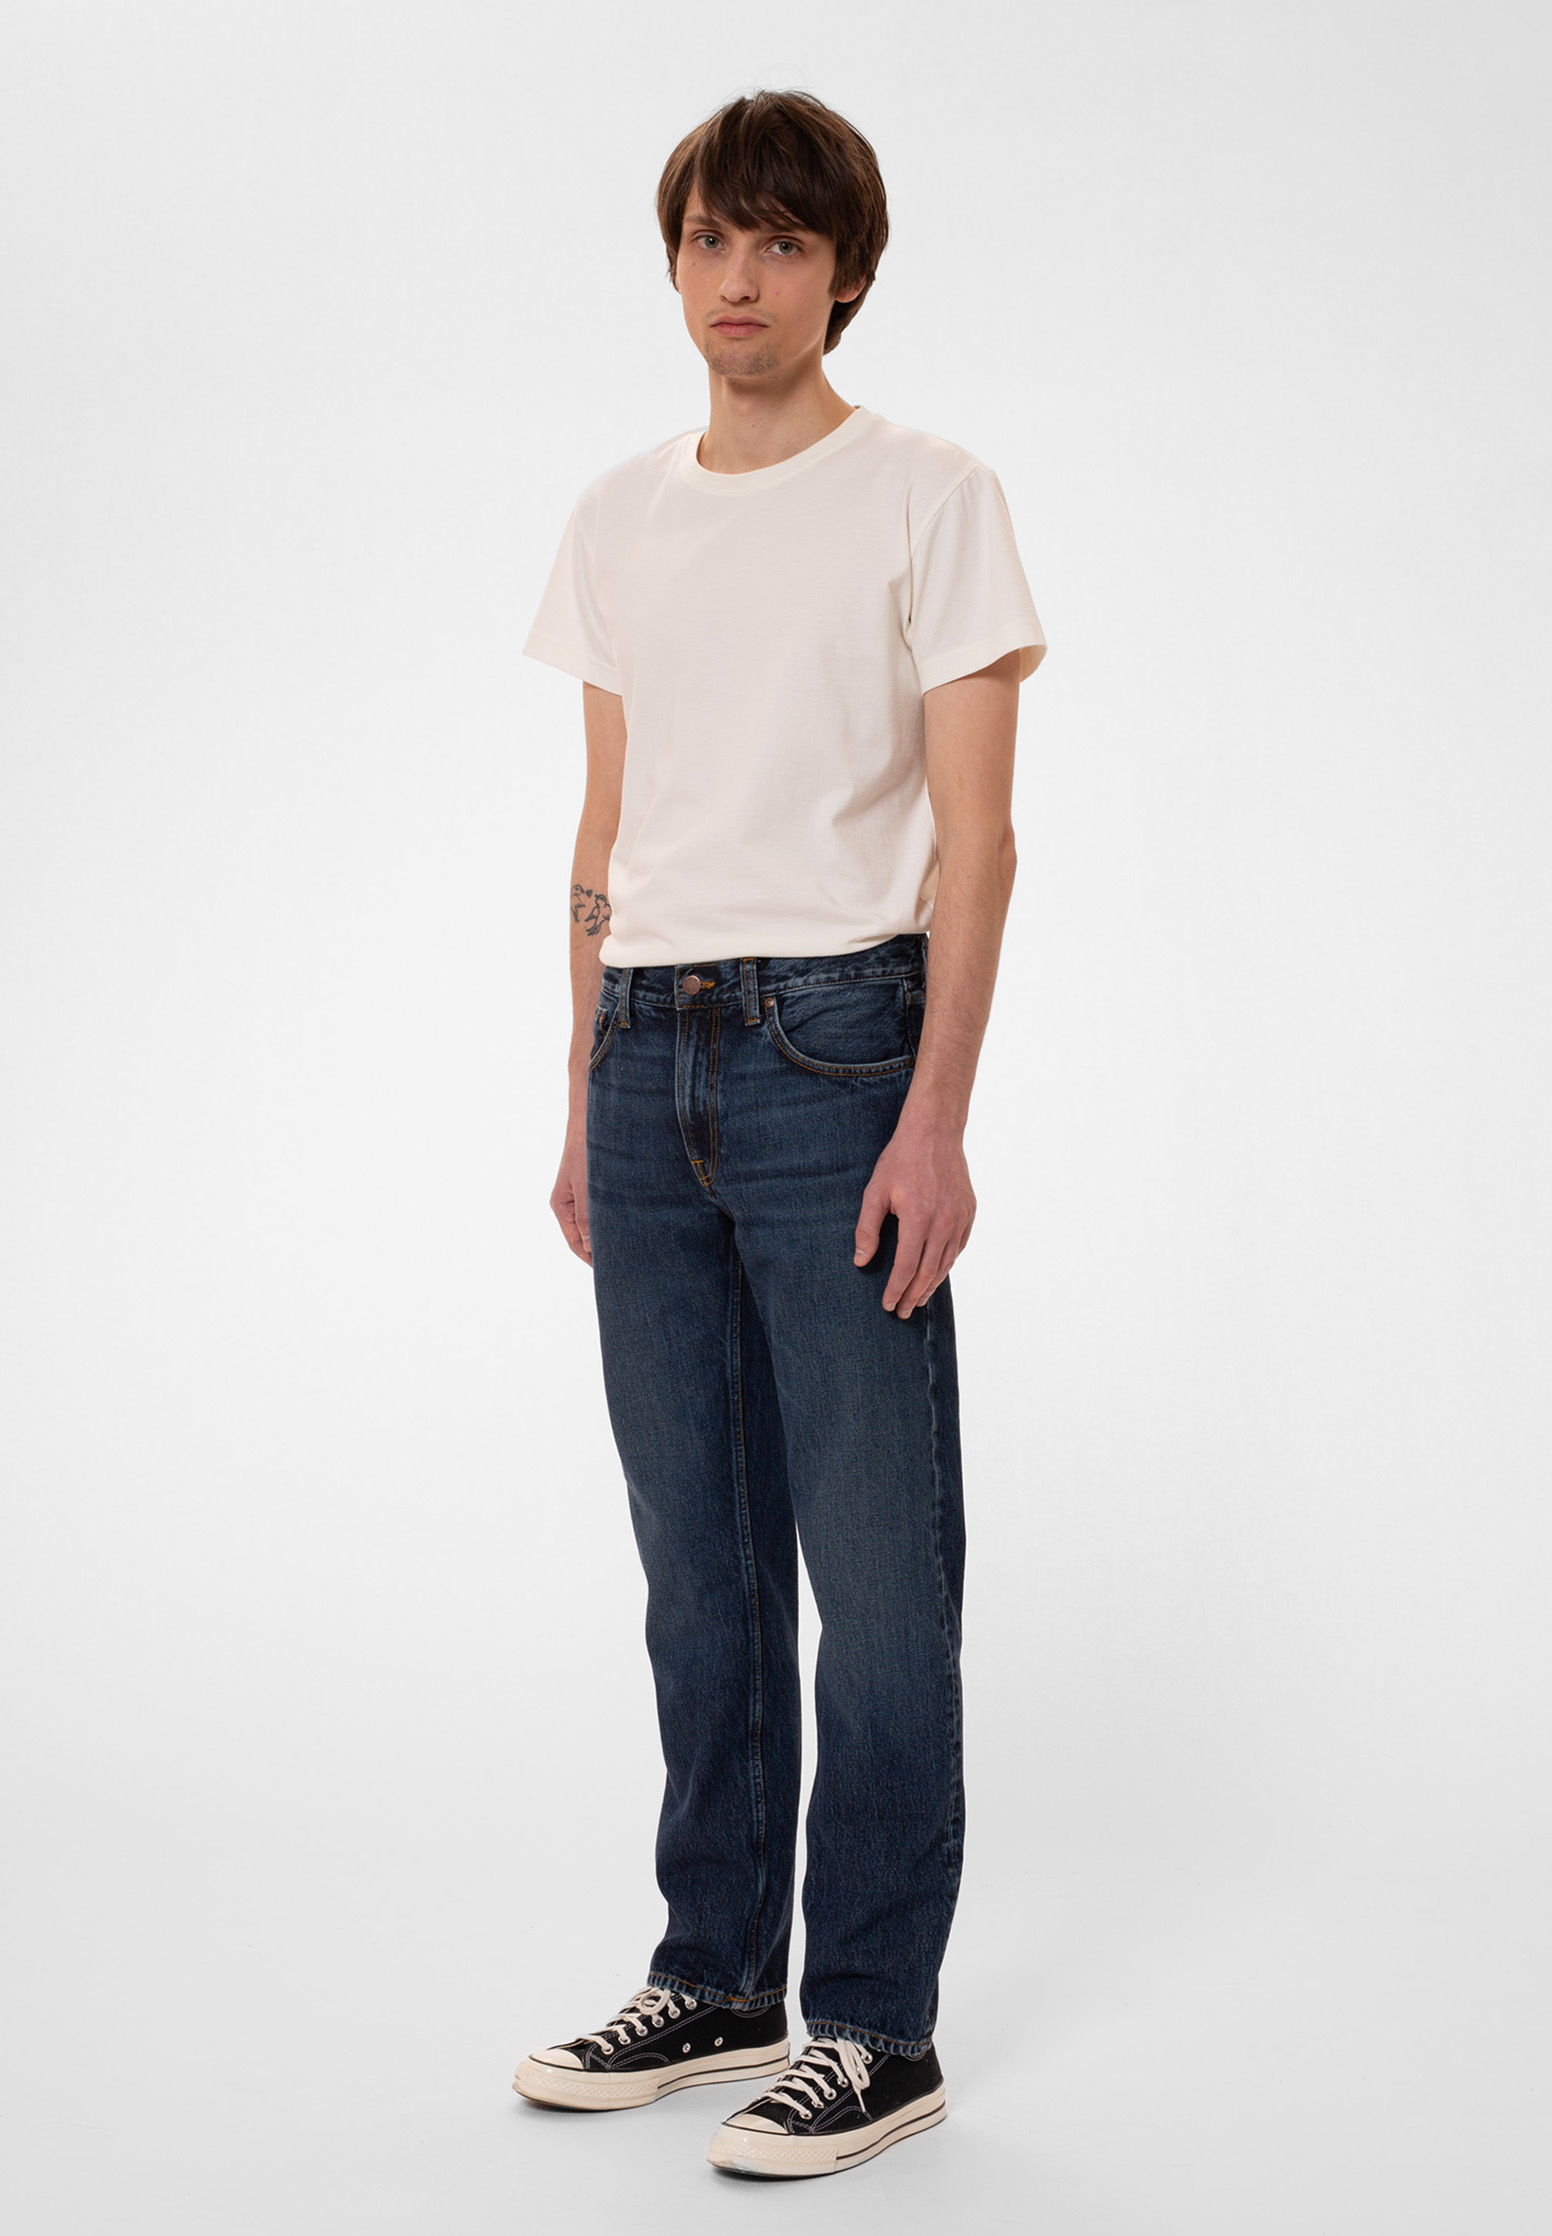 Hosen, T-shirt, Jeanshose, Person, Jugendlich